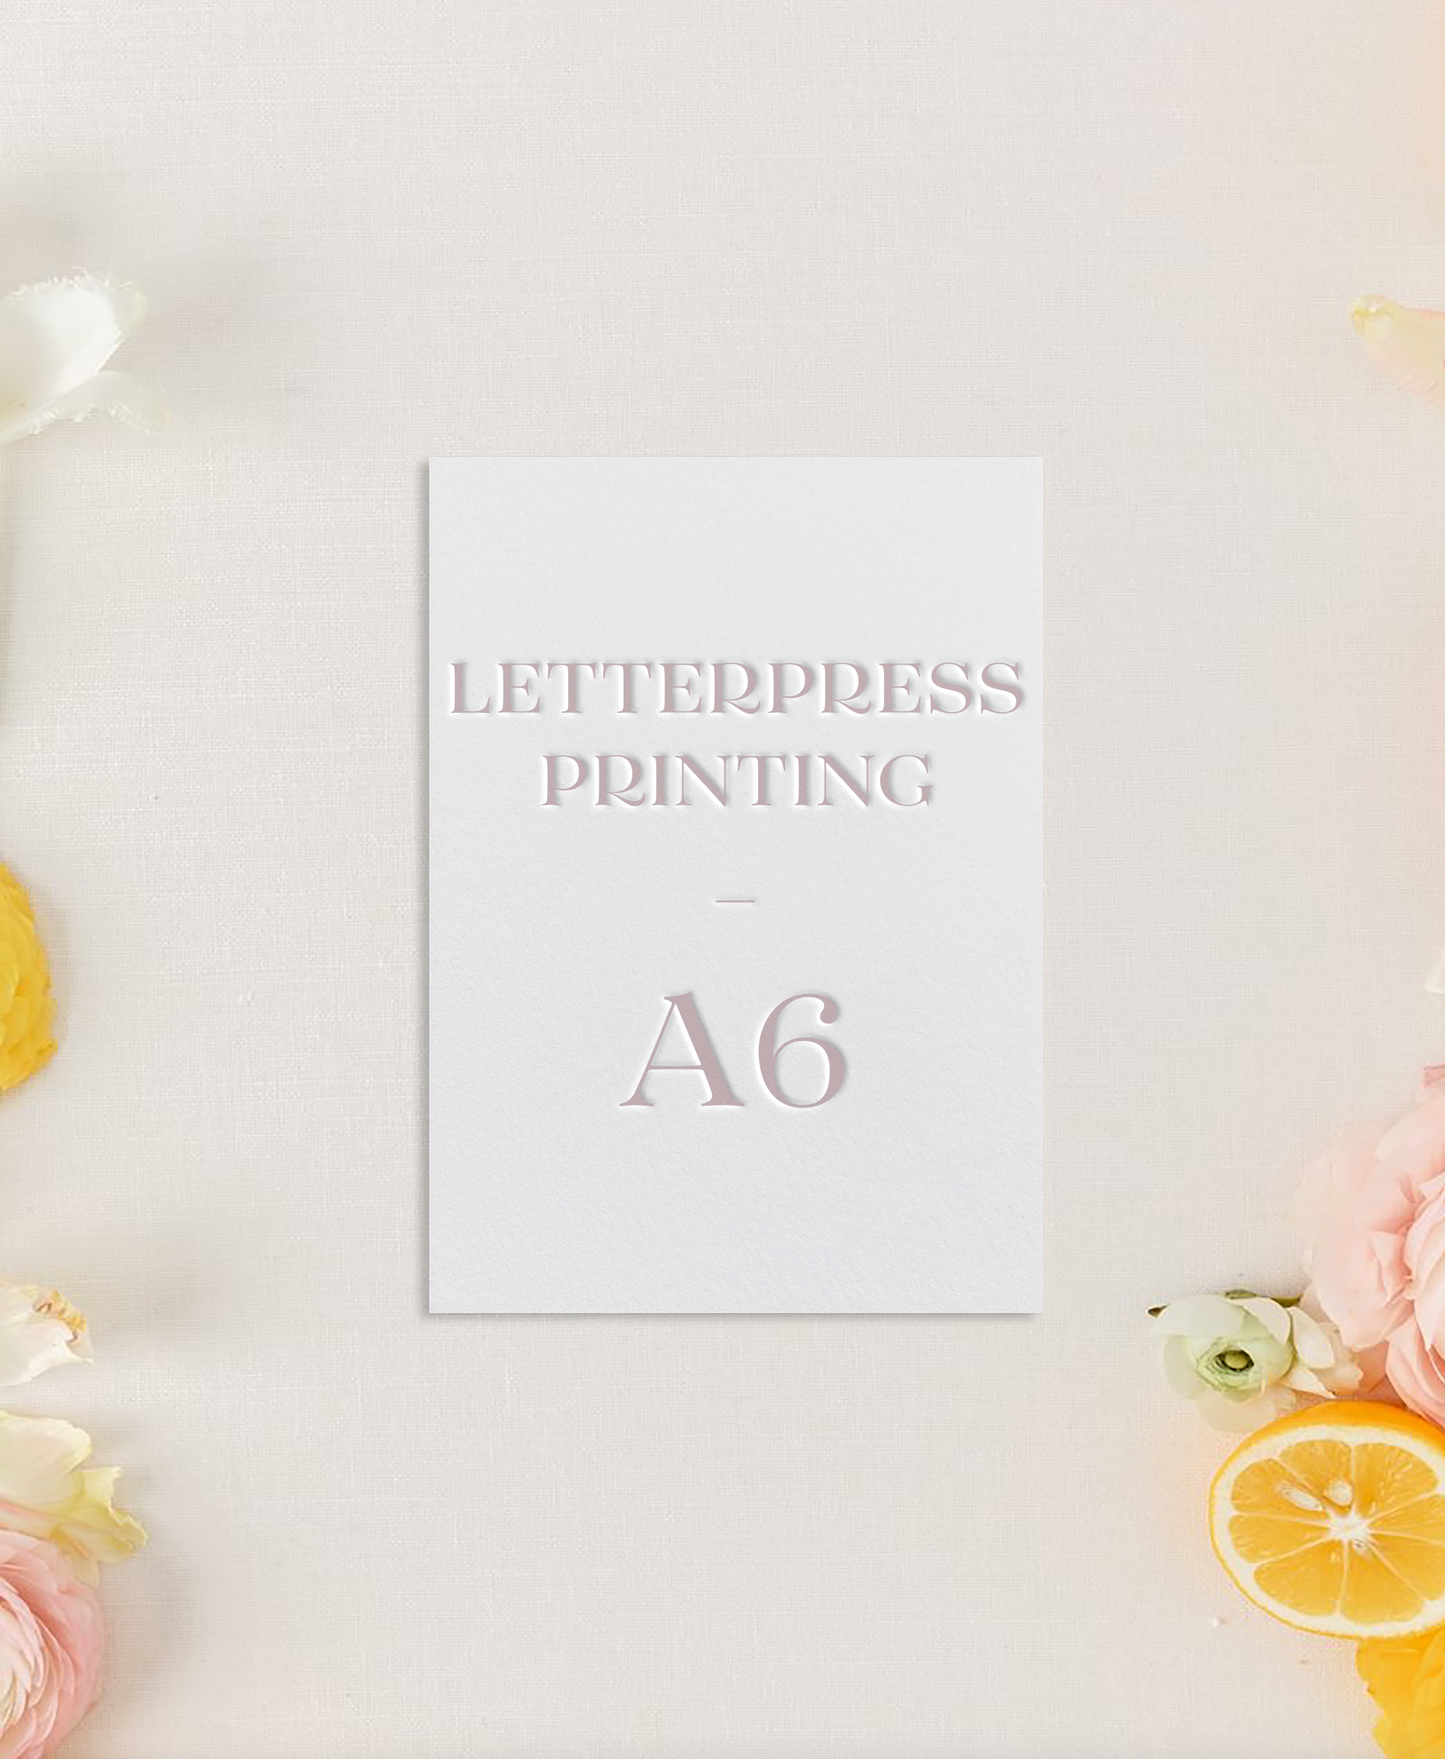 Invitation Printing / Letterpress Printing / A6